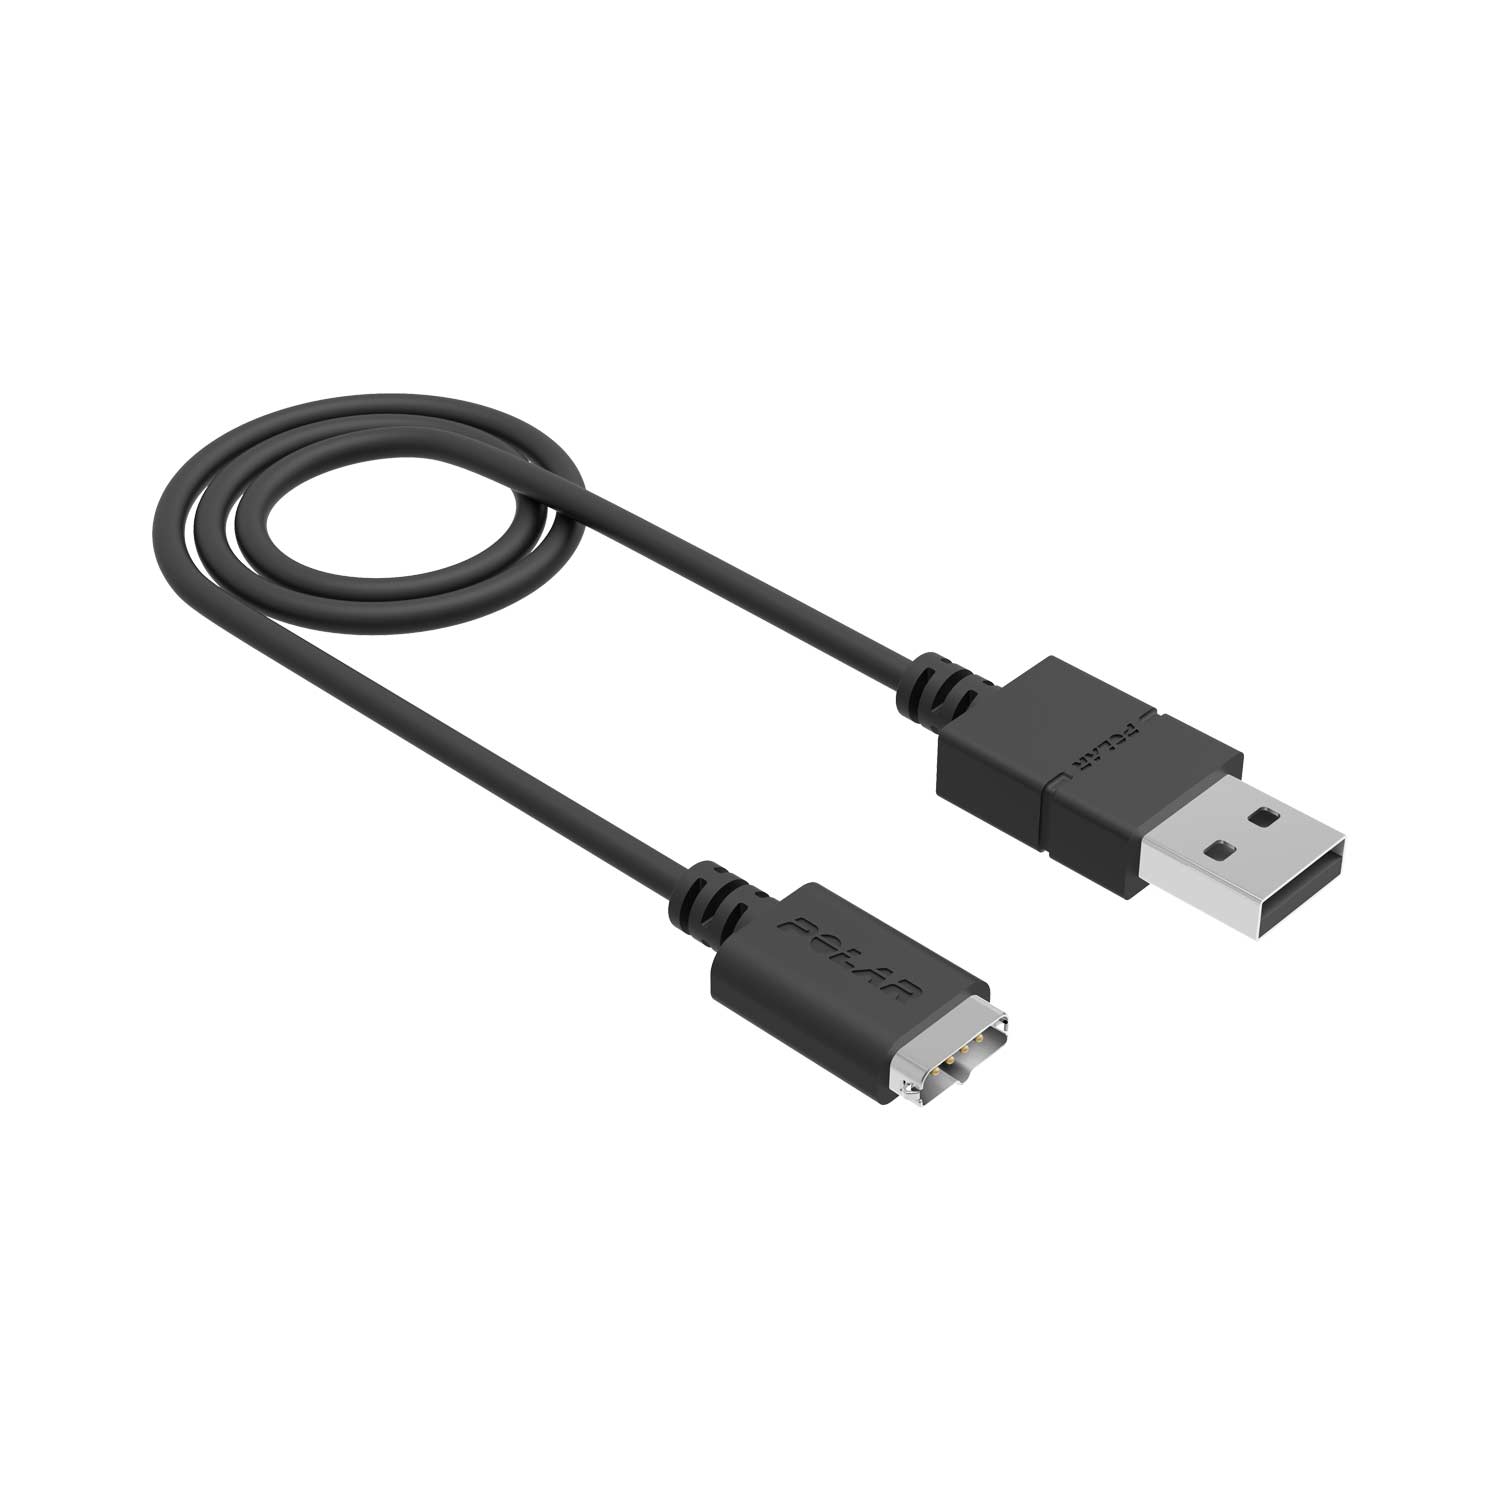 USB-kabel til Polar Danmark